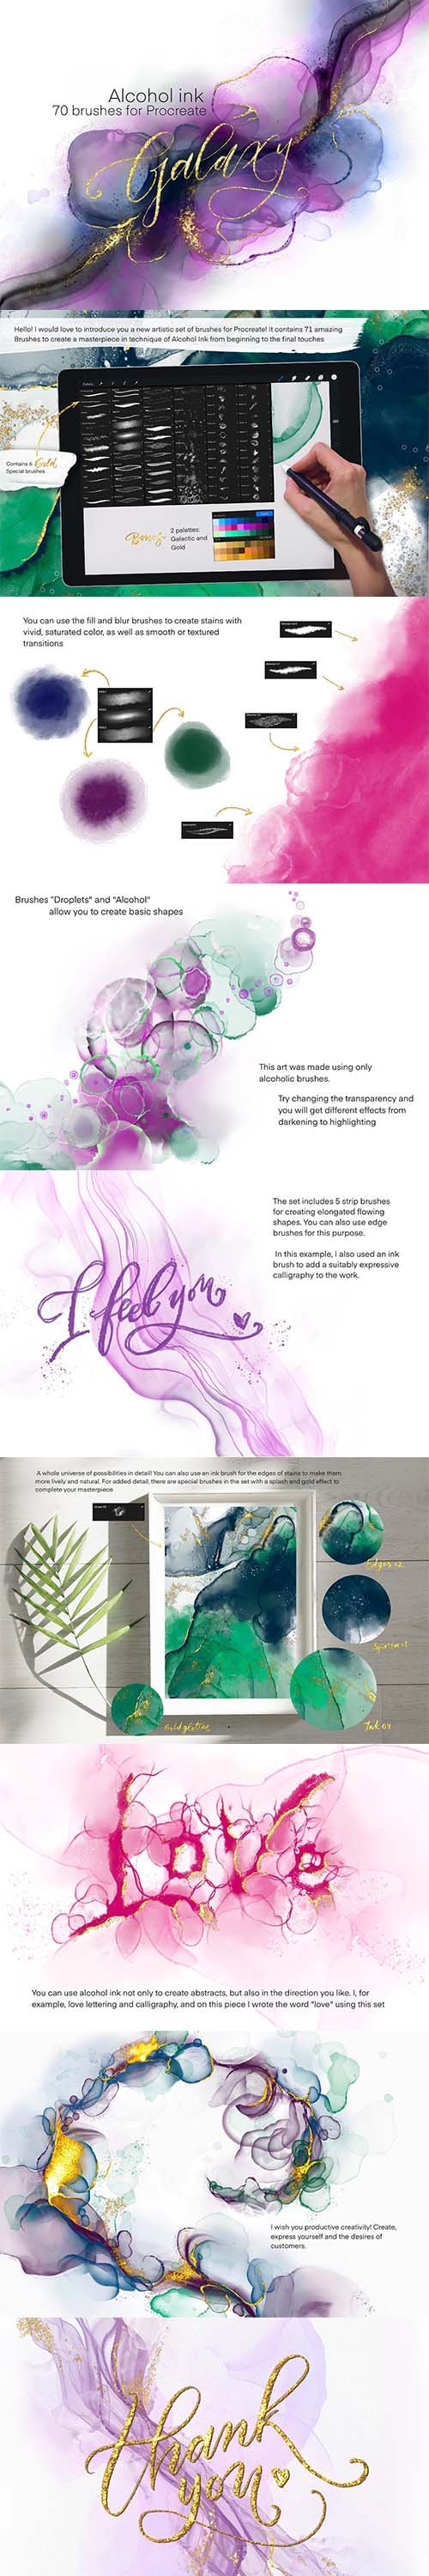 CreativeMarket - Galaxy Alcohol Ink Brushset - 5997008